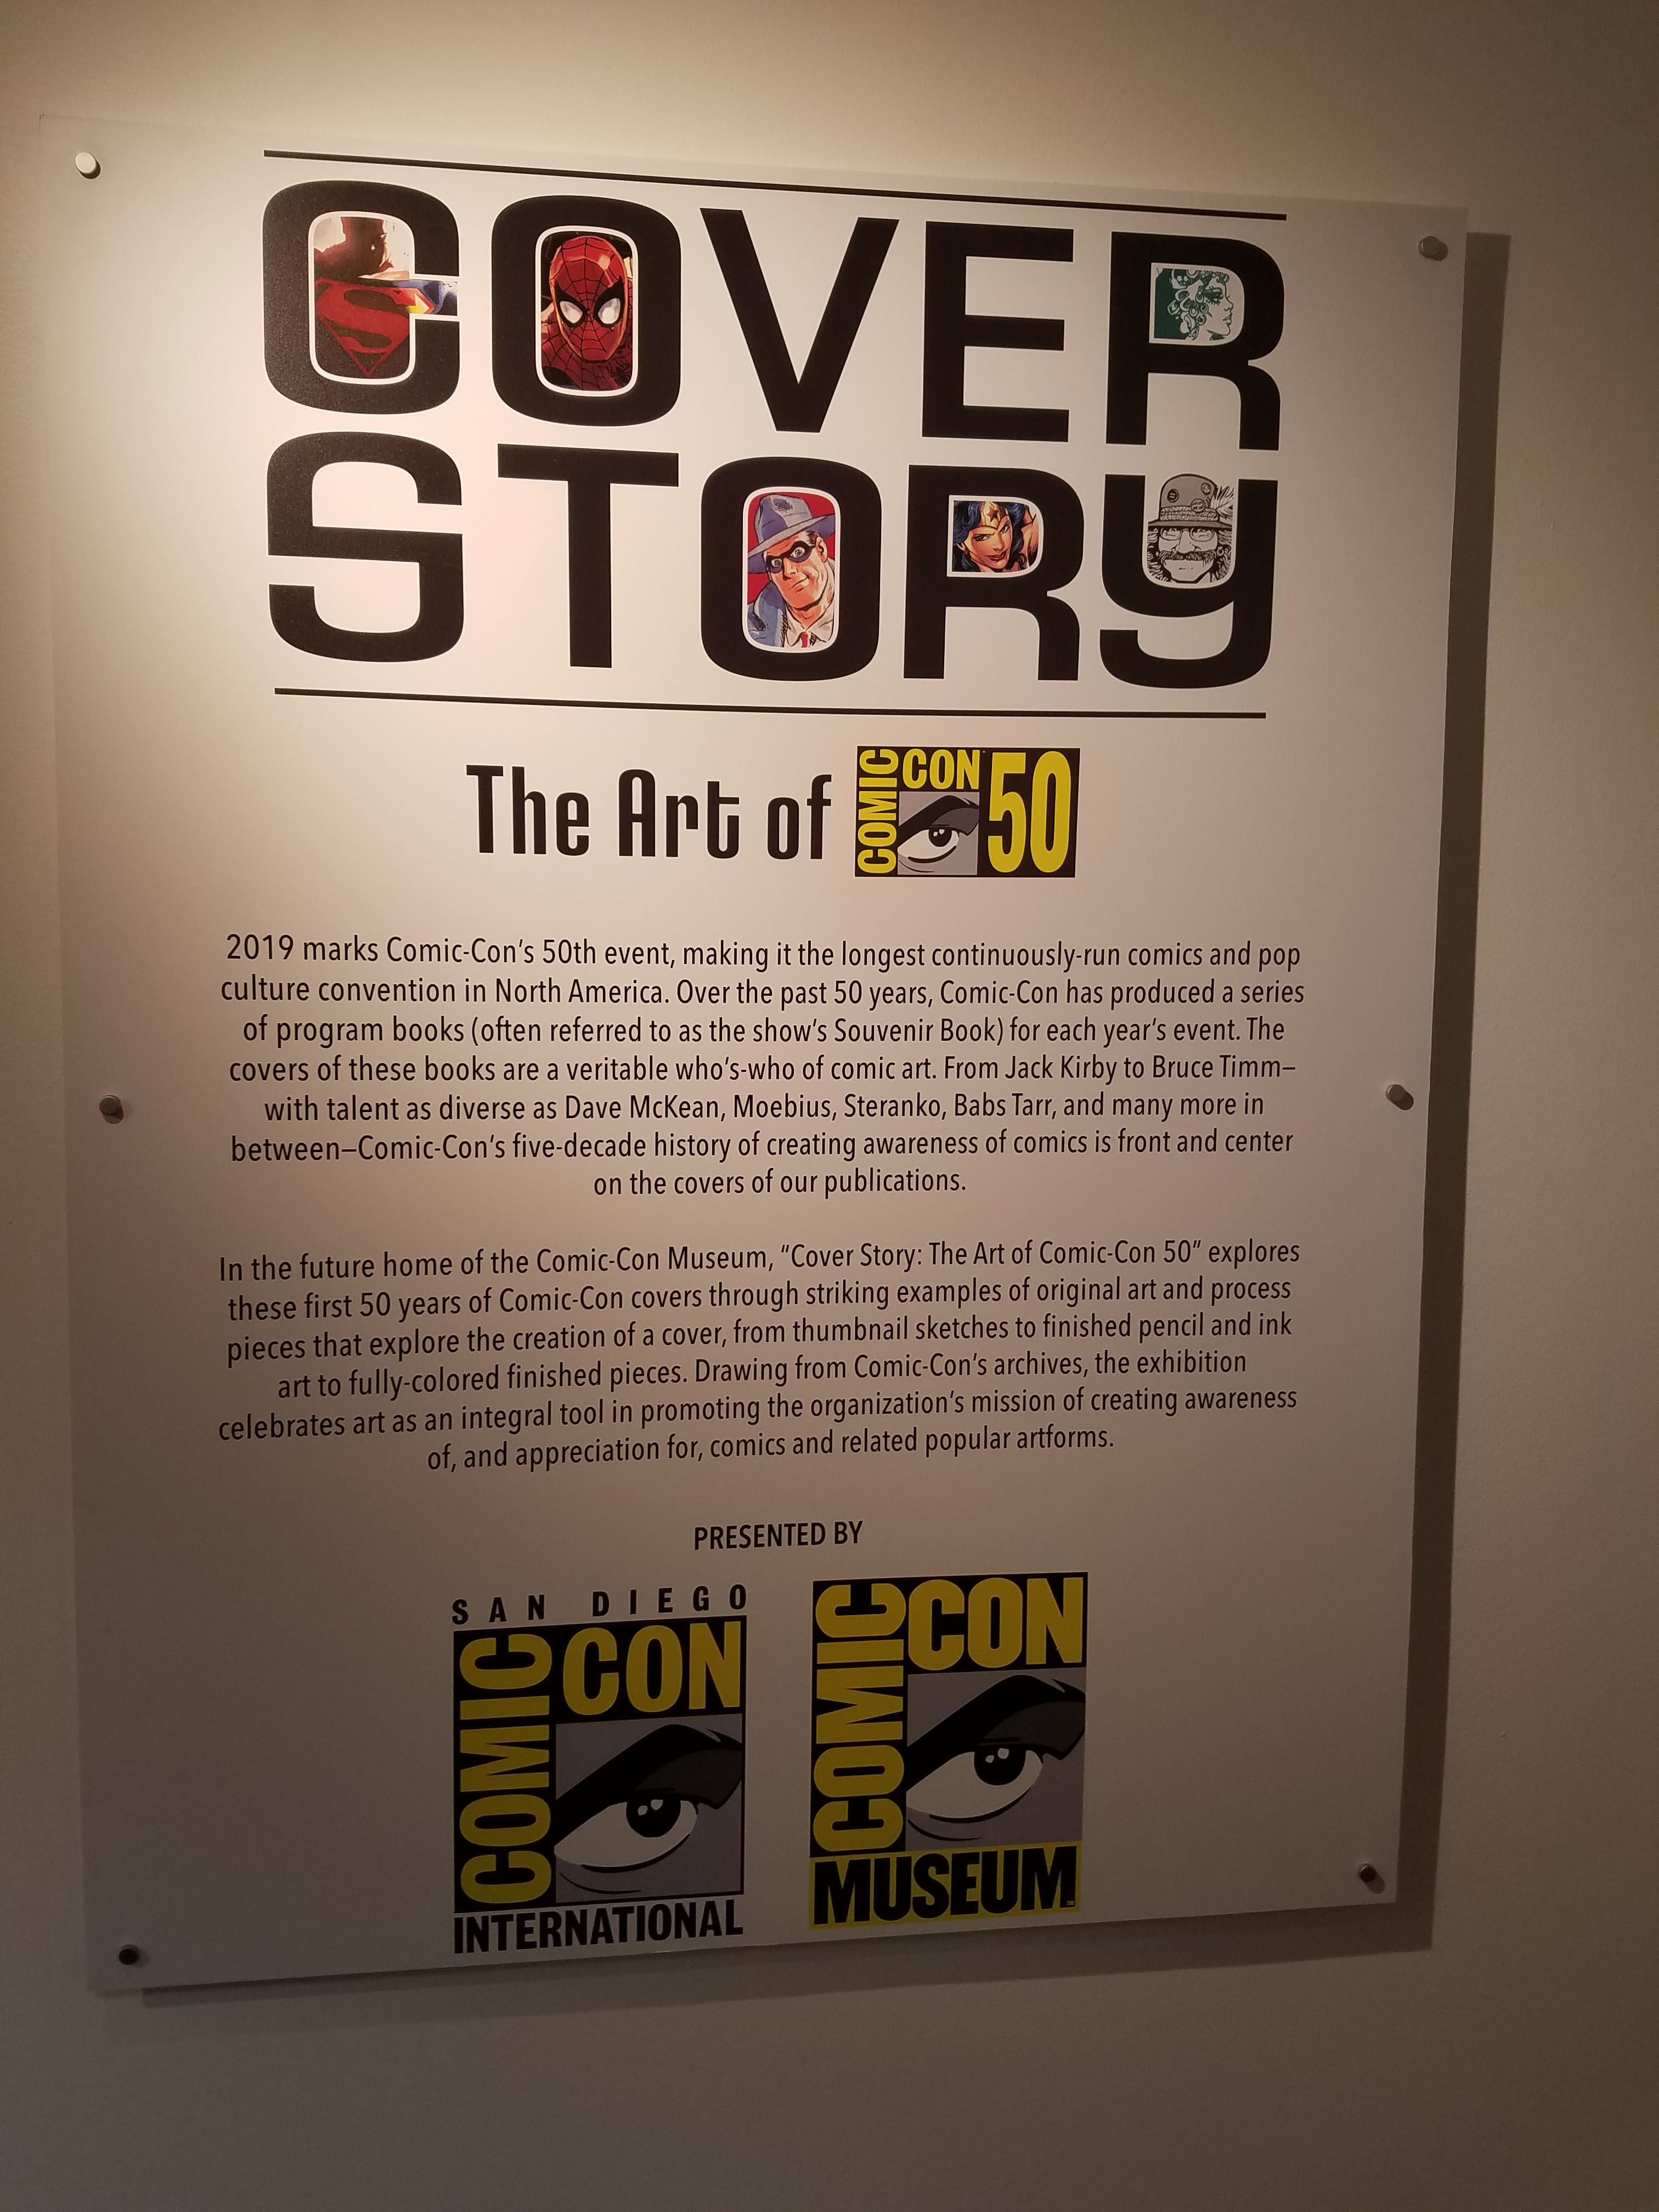 San Diego Comic-Con Museum